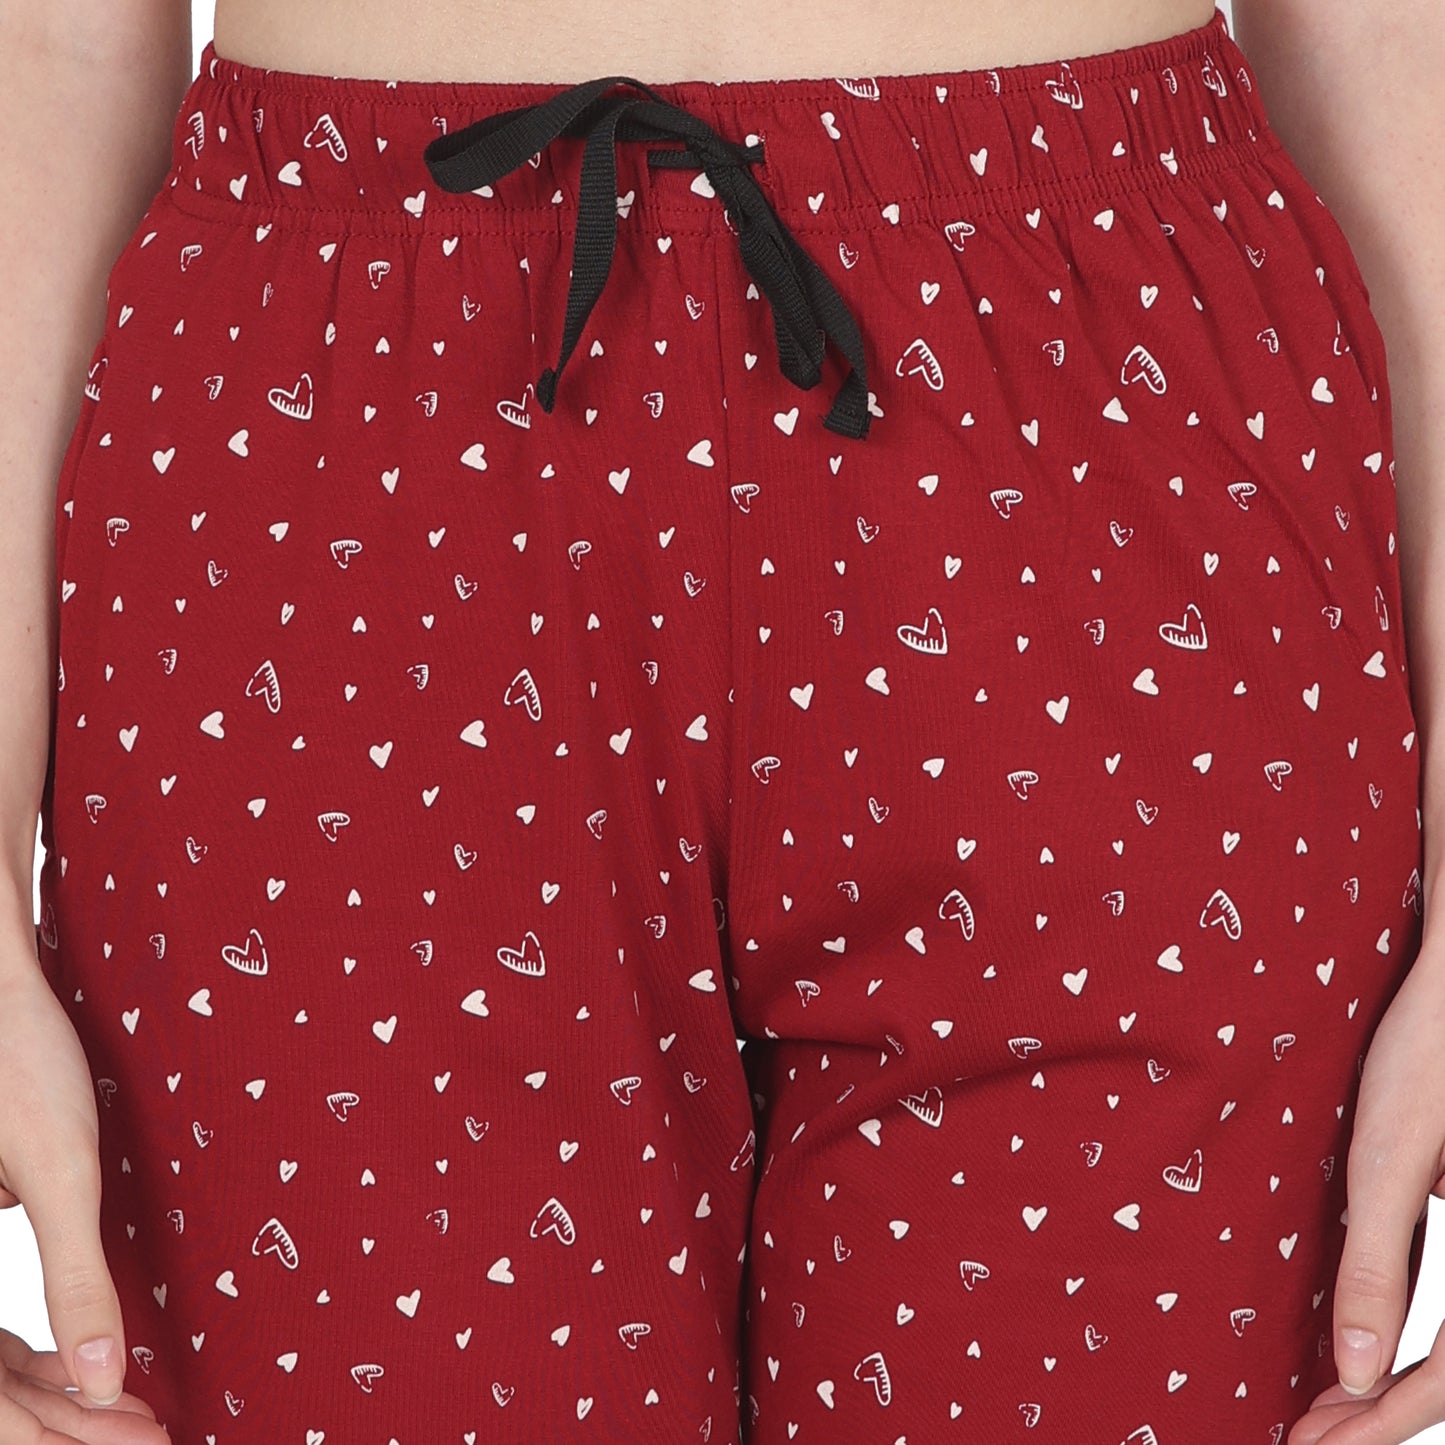 Eazy Women's Printed Capri Pants- Pack of 3- Blush, Cherry Red & Navy Blue